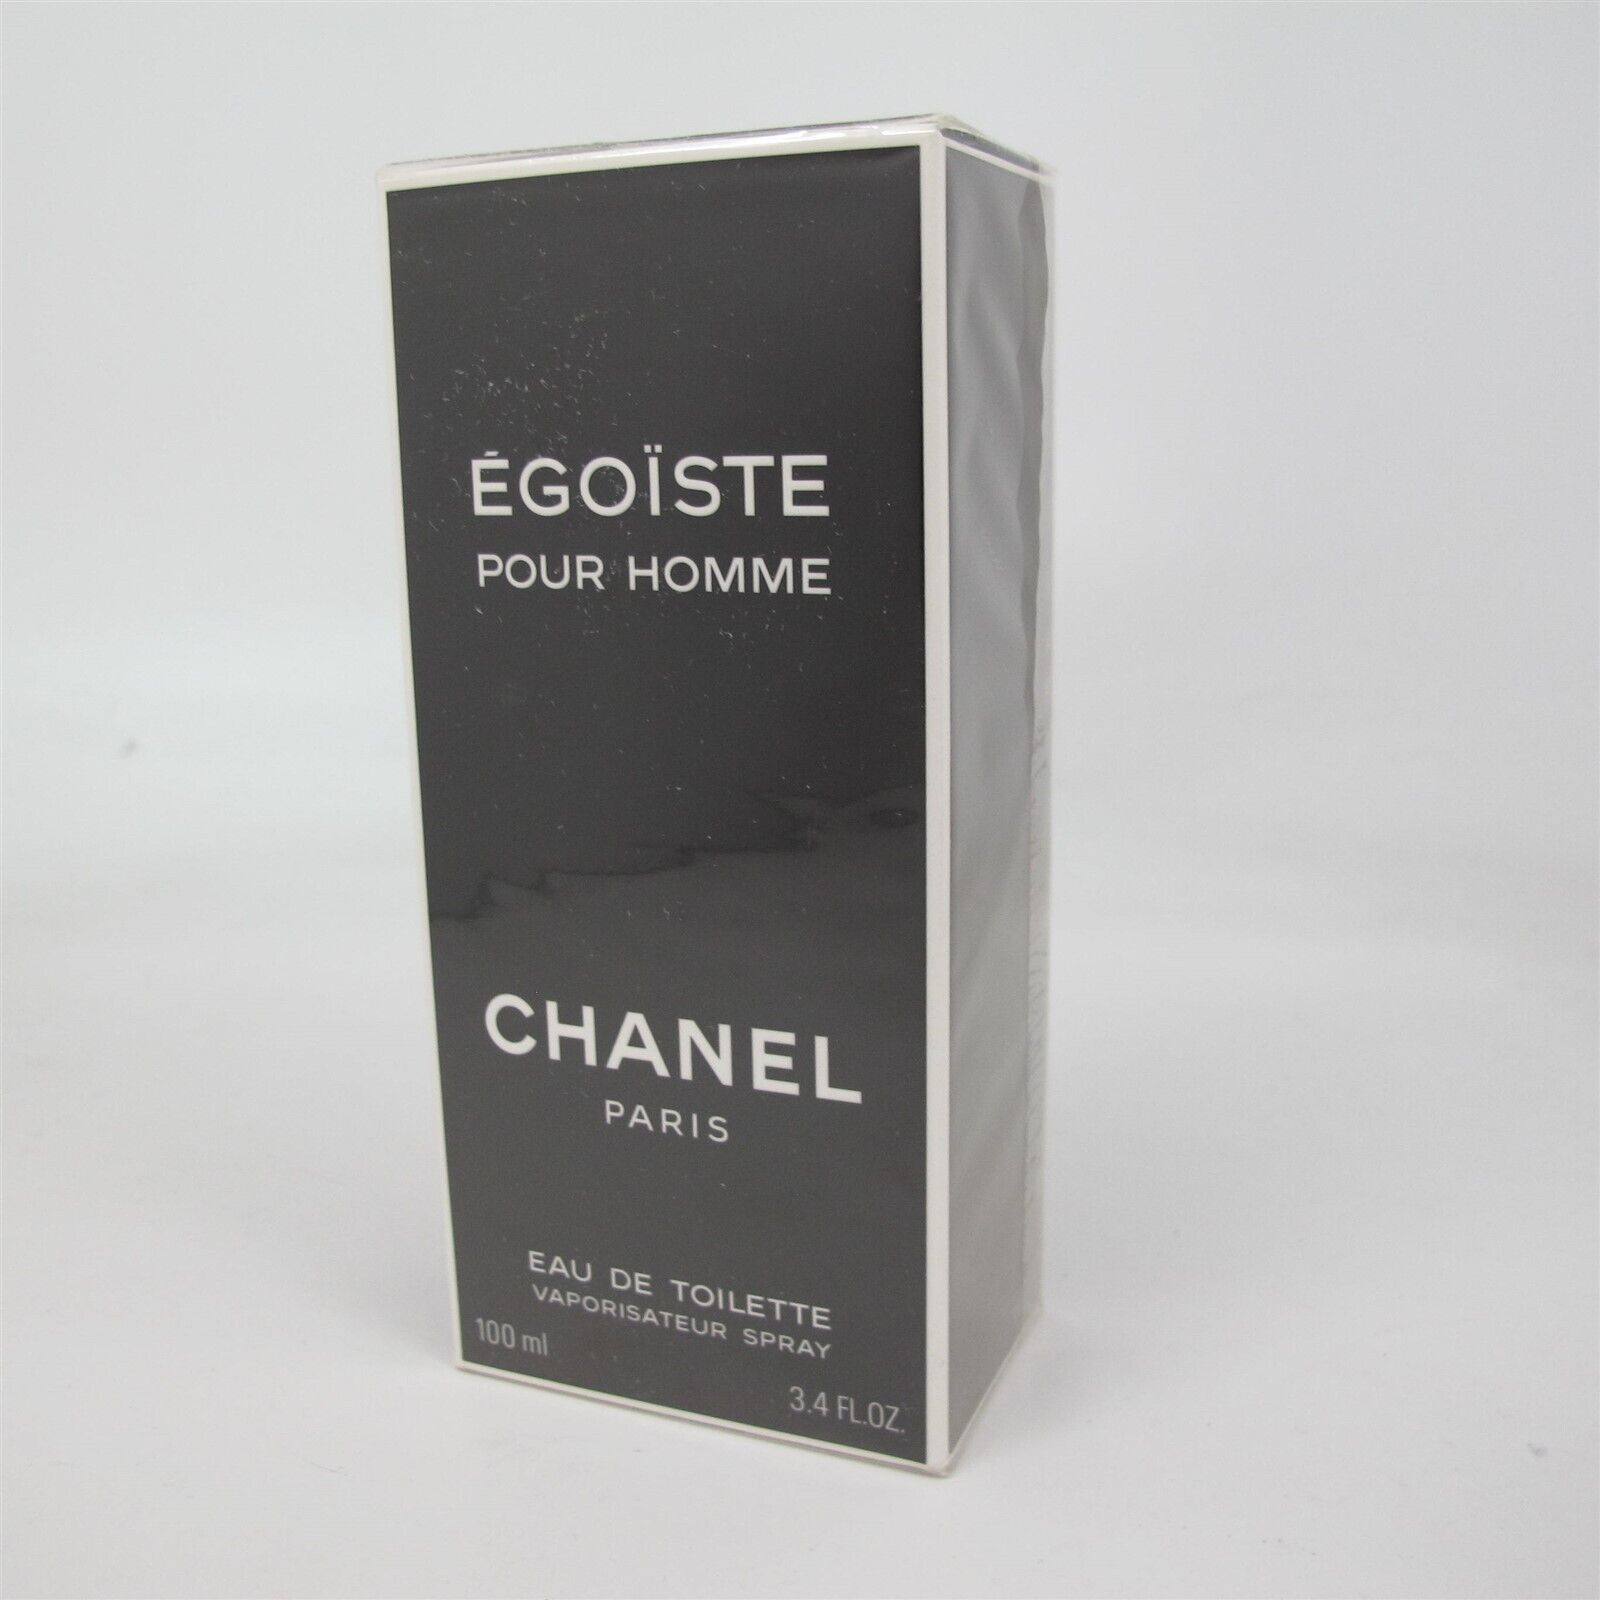 BLEU DE CHANEL by CHANEL Paris Men's Eau de Toilette Spray, 3.4 oz, 100 ml,  NIB